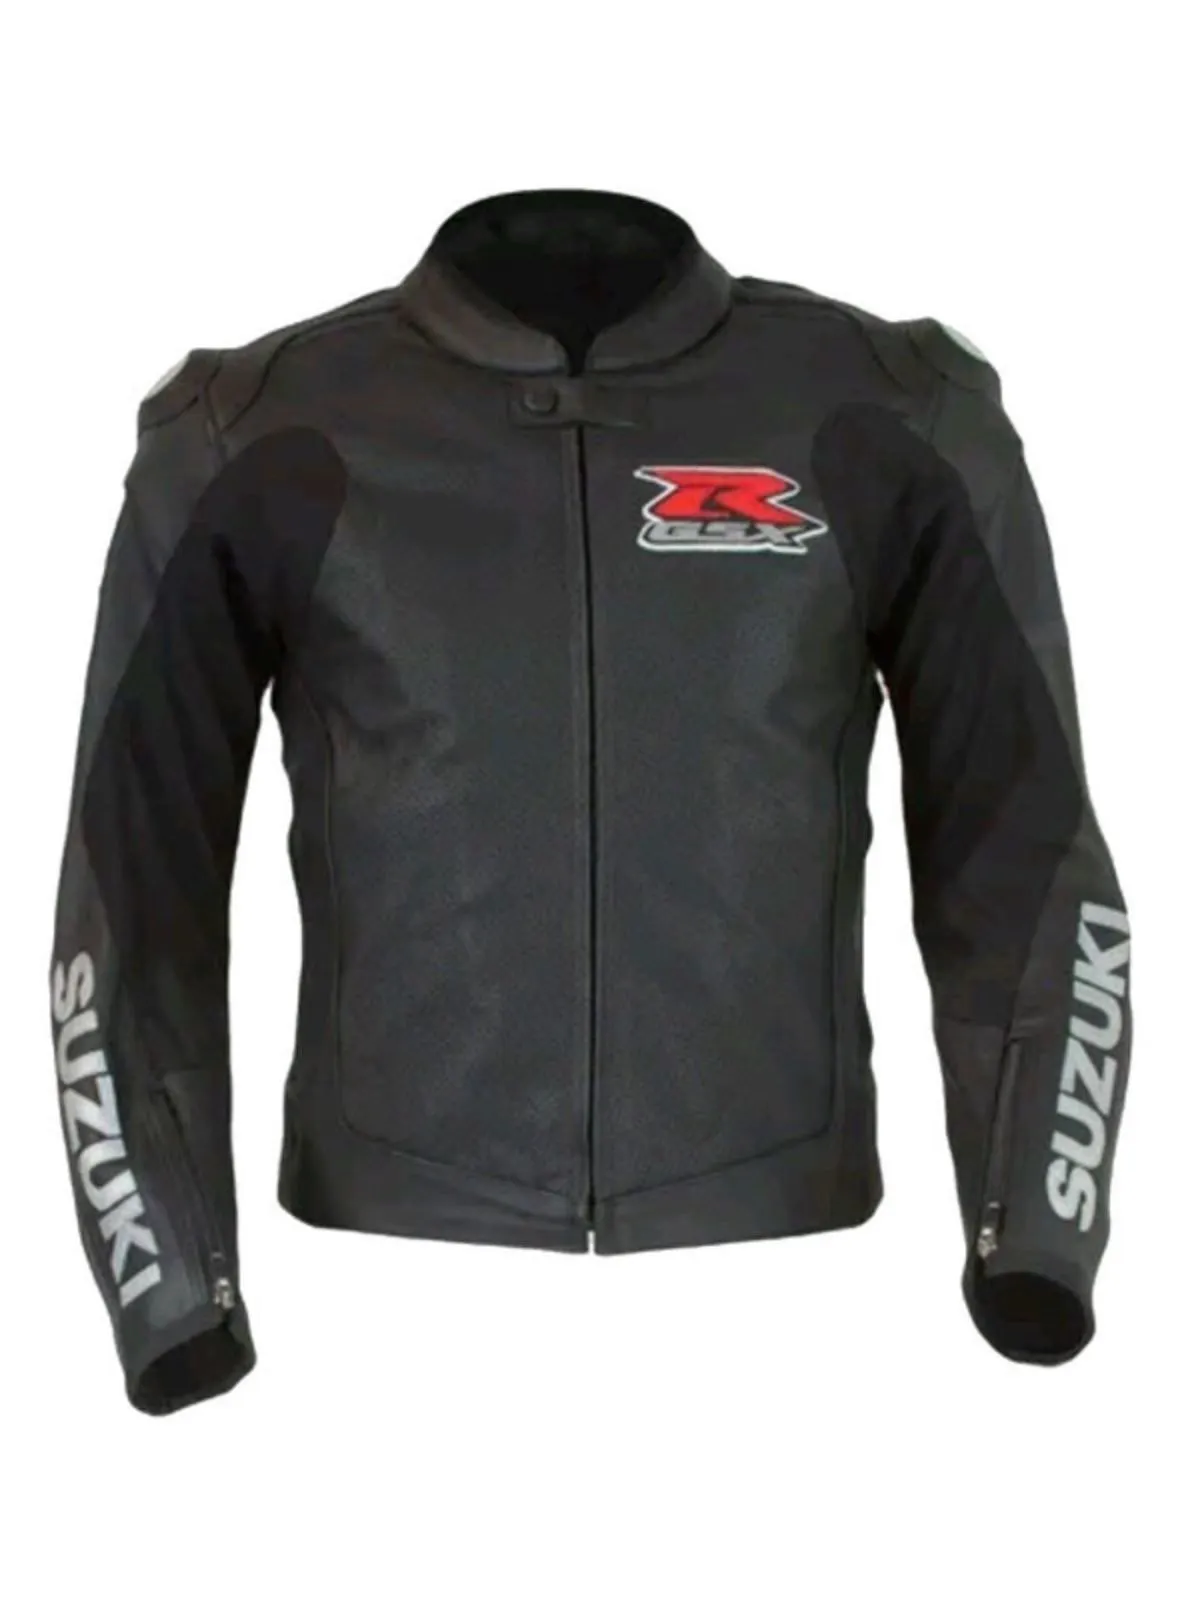 GSX-R Black Leather Jacket | The Leatherz